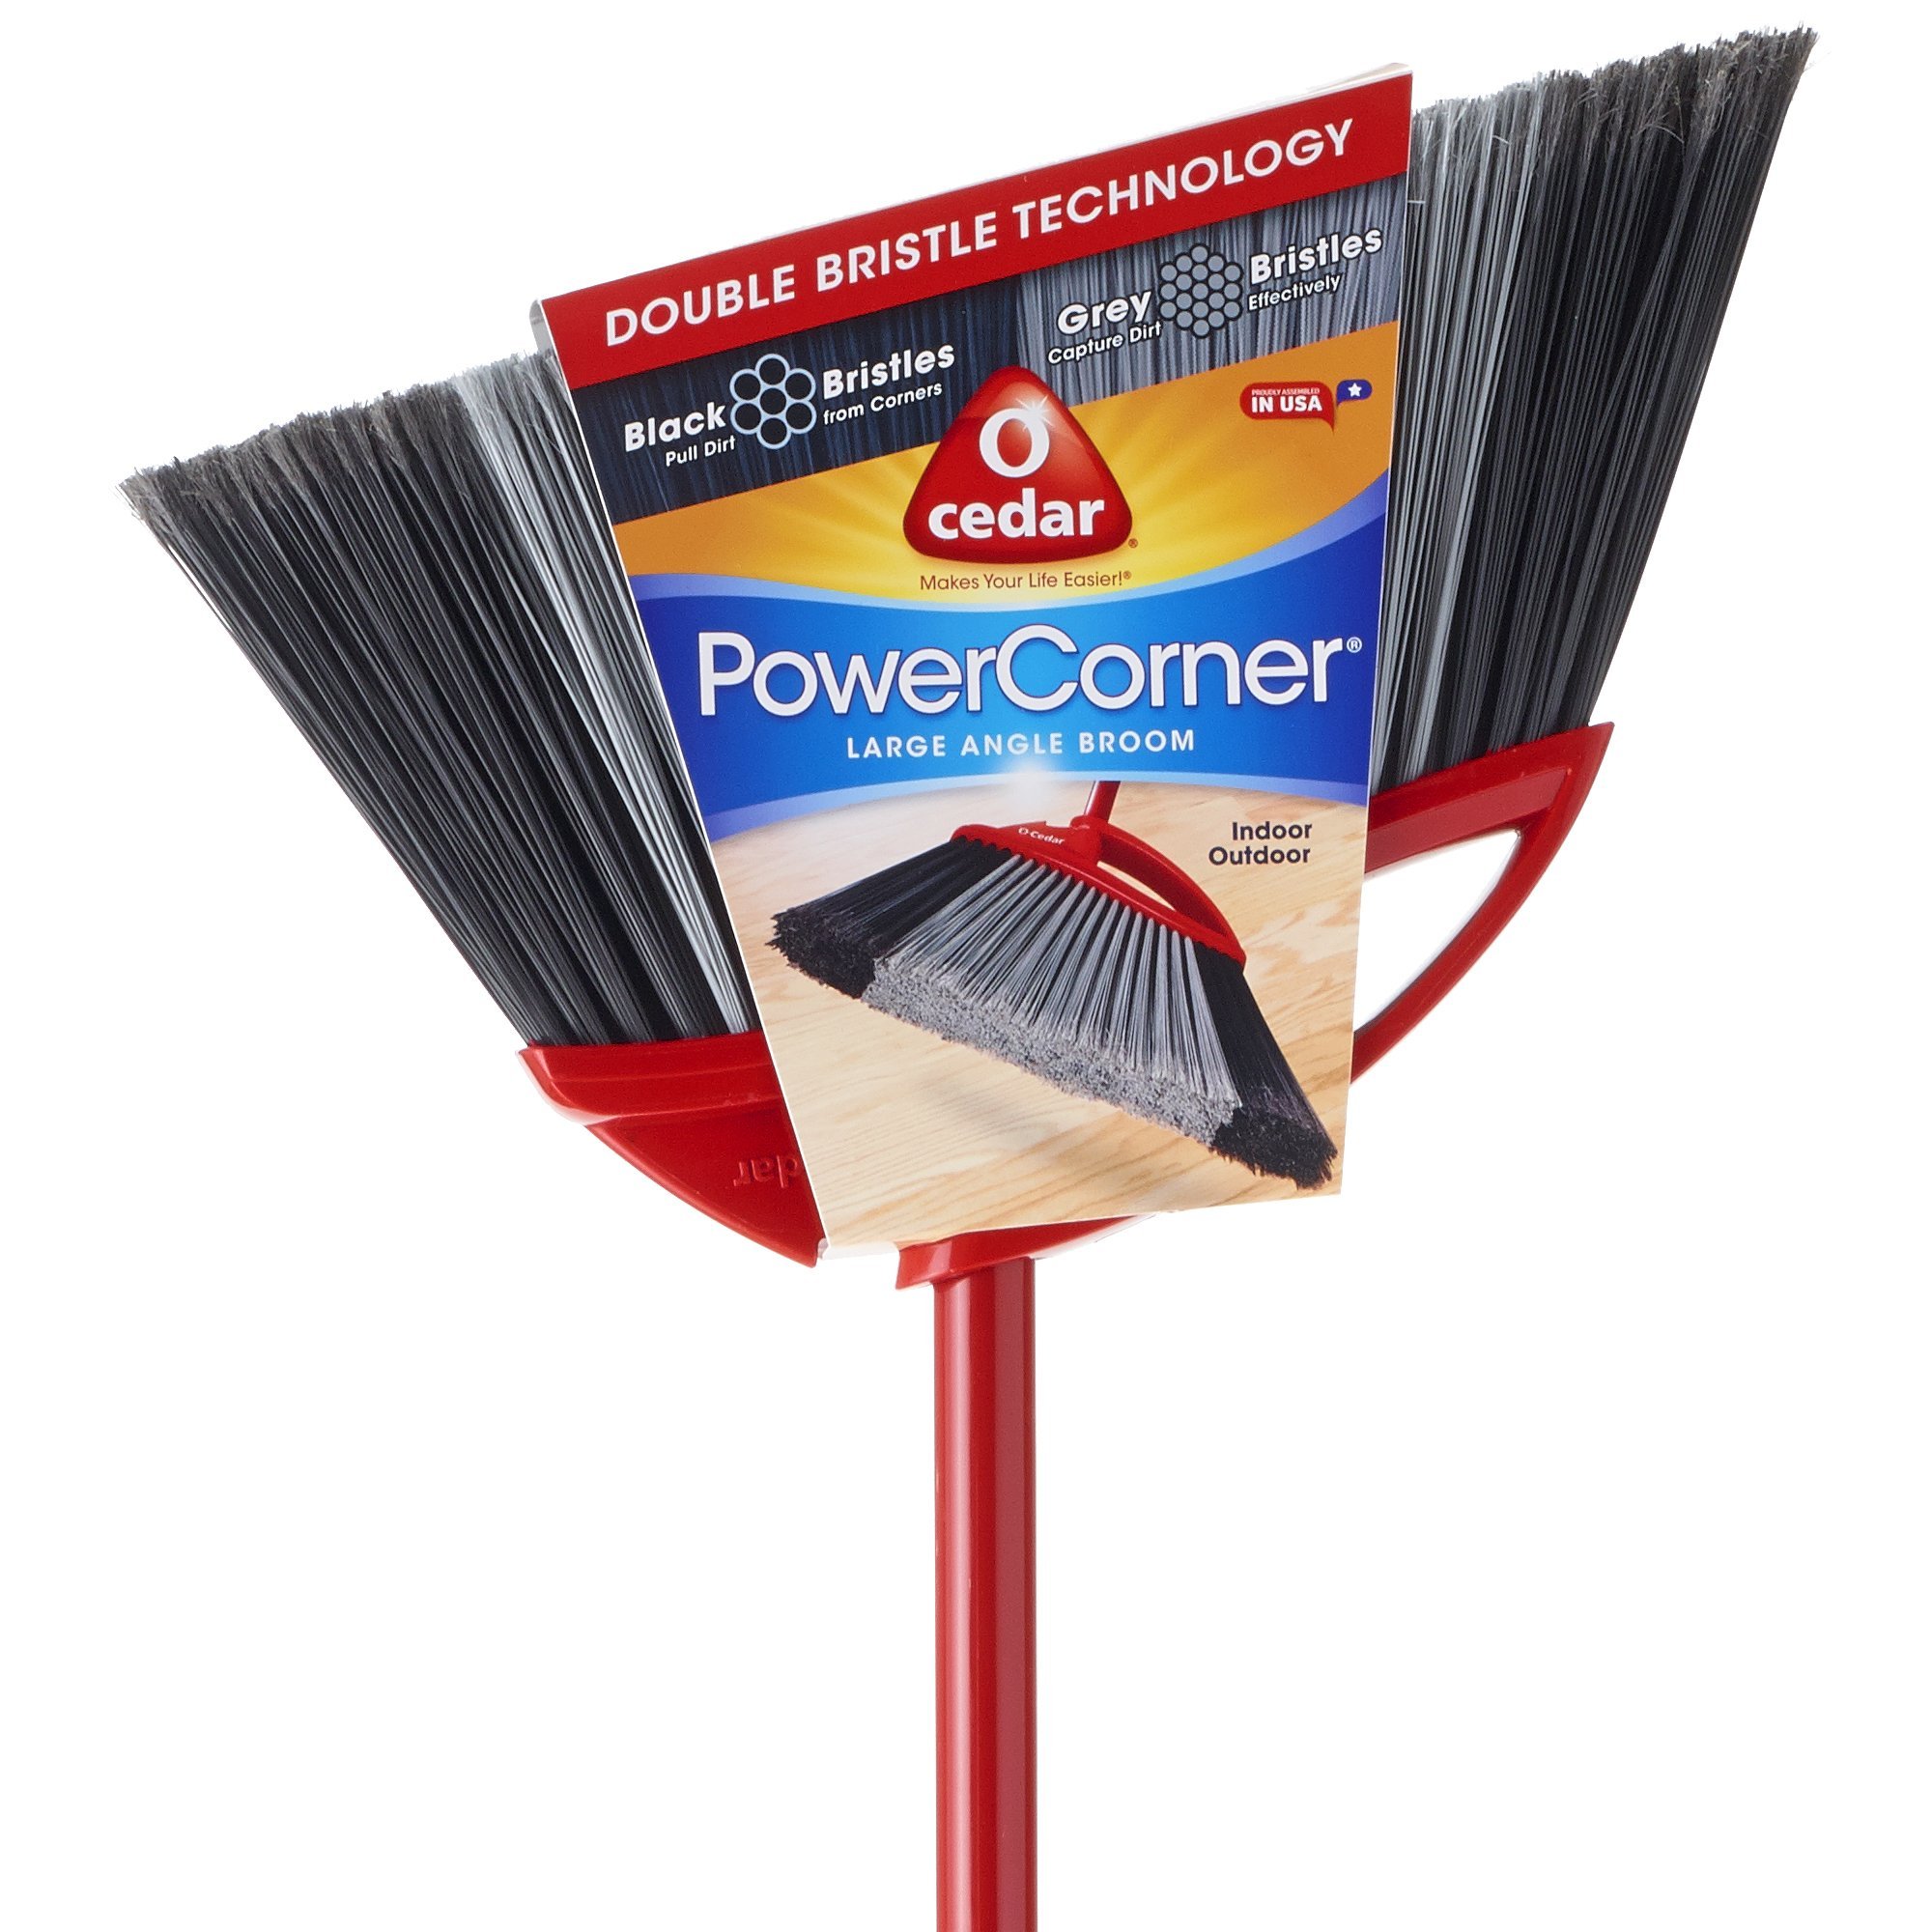 O-Cedar Power Corner Large Angle Broom 1 - $25.95